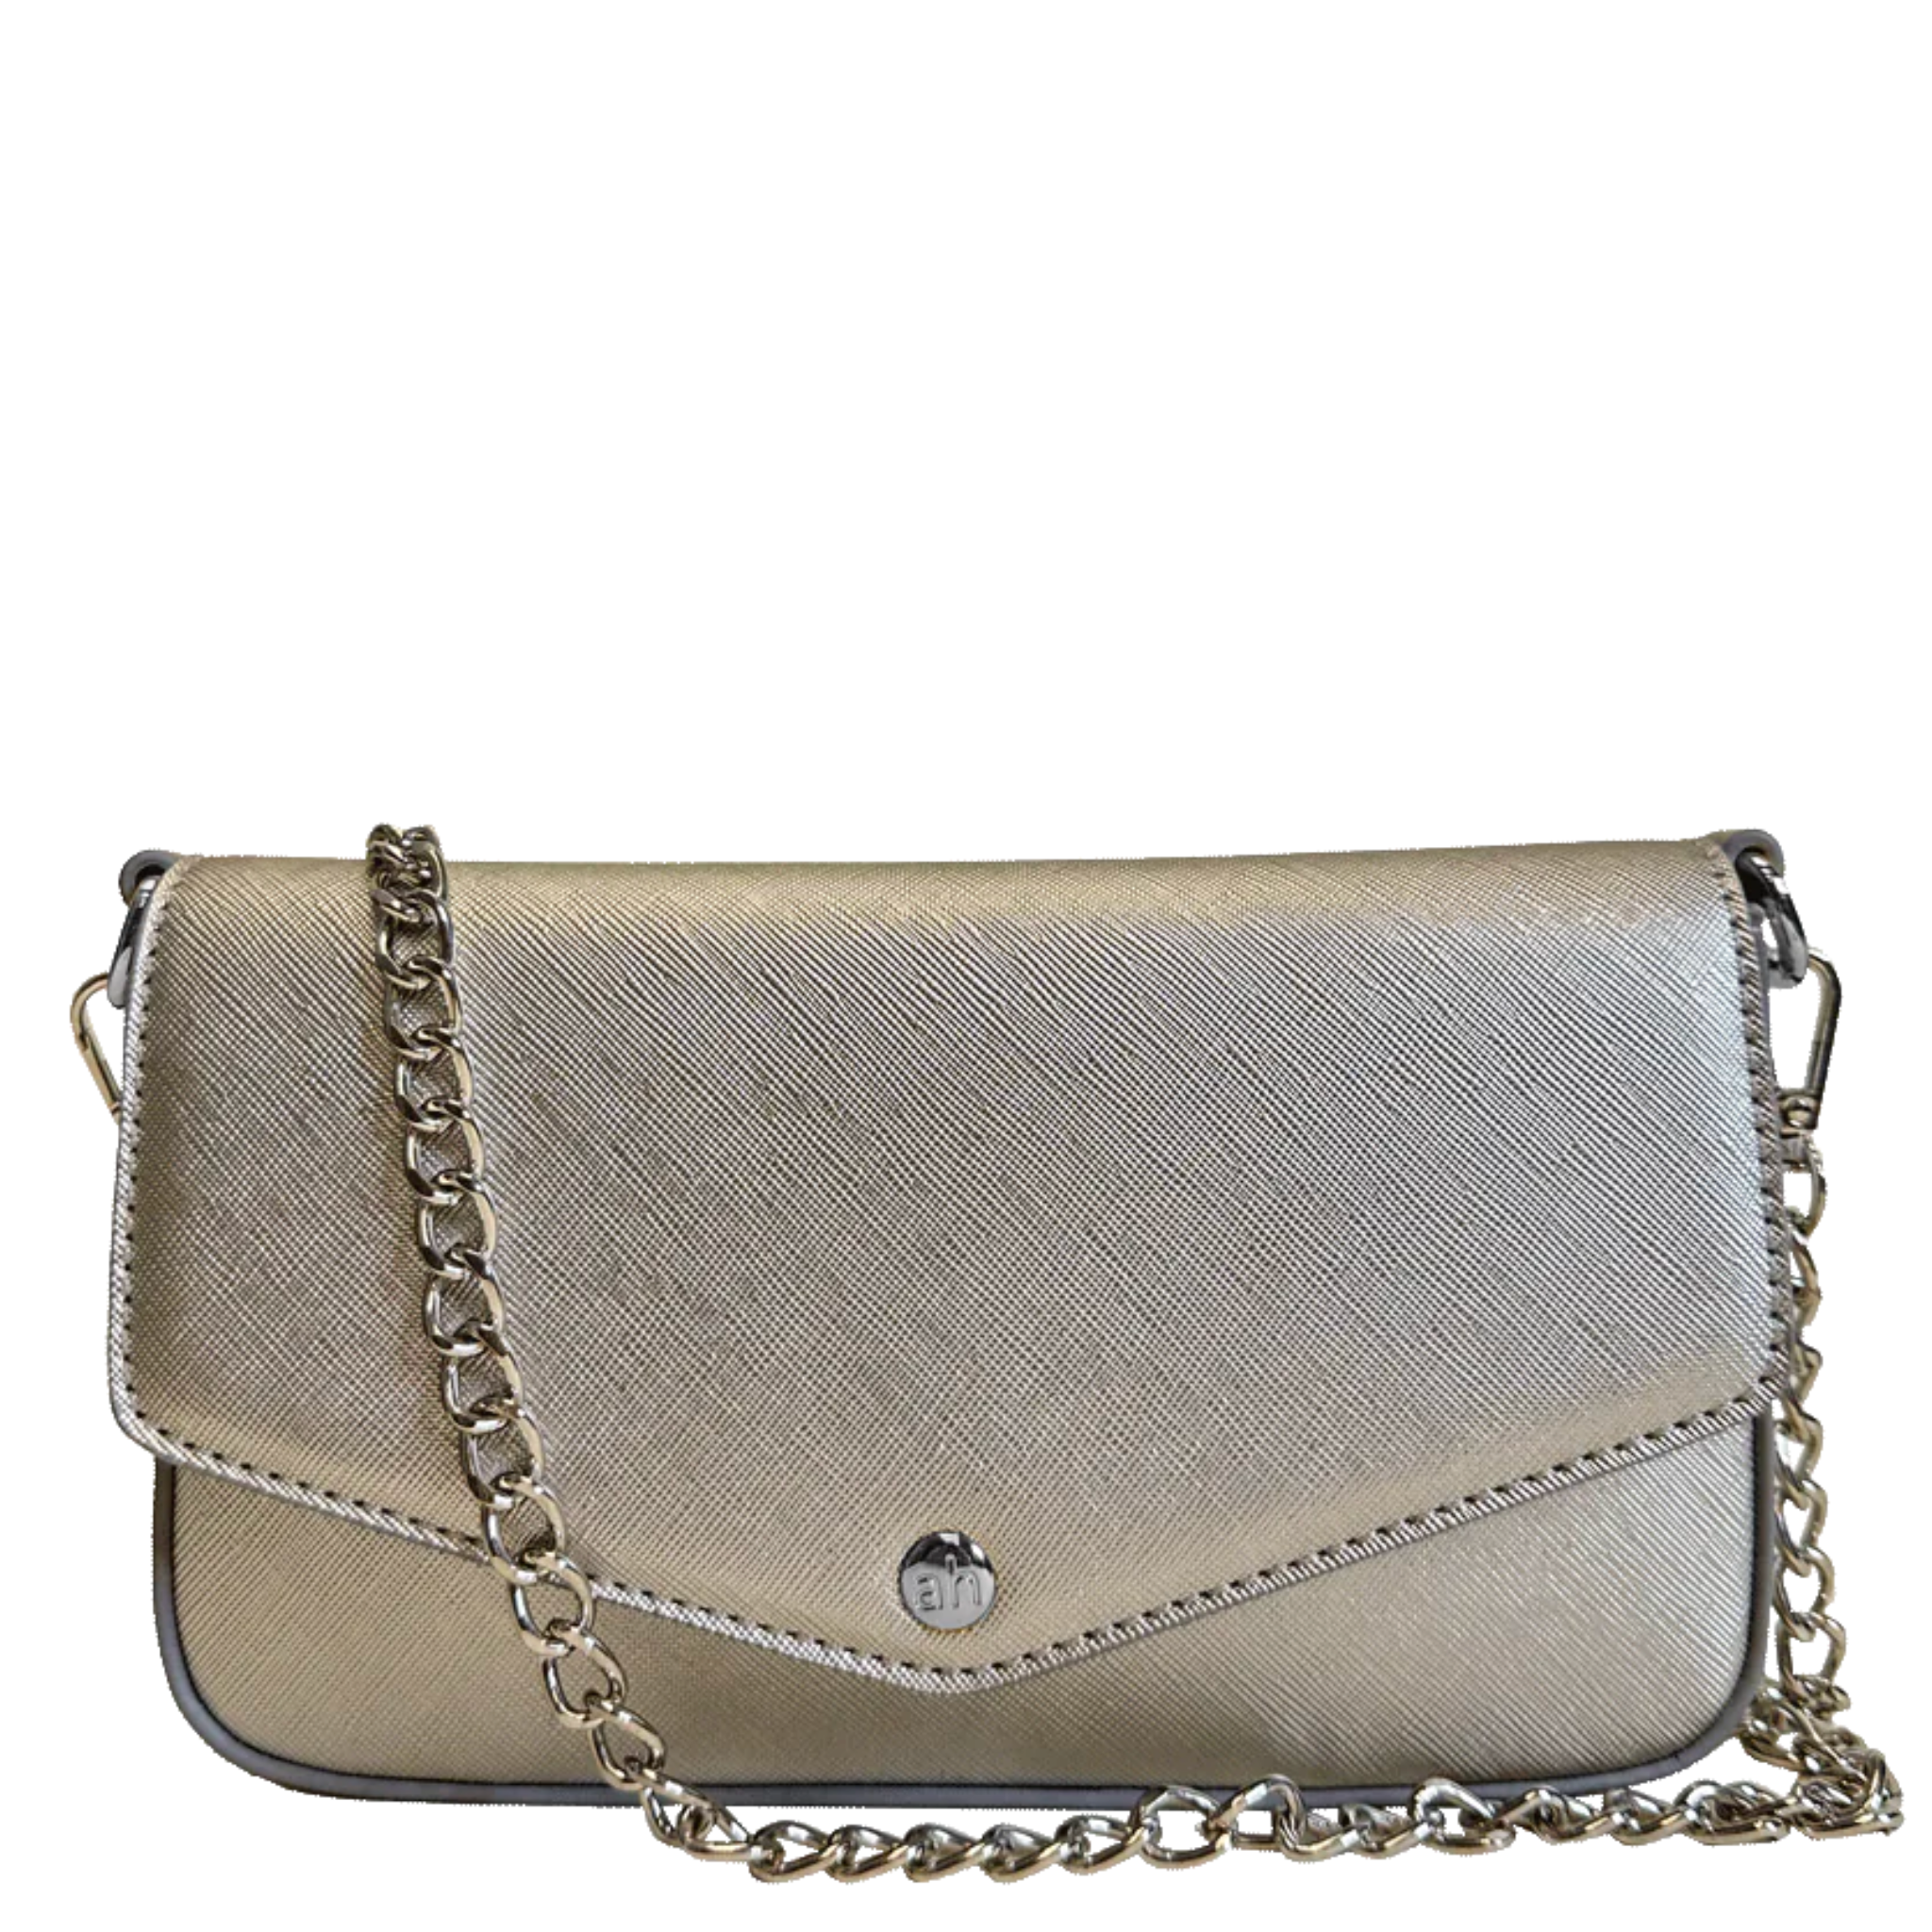 Louise Faux Leather Flap Bag w/Removable Chain Strap